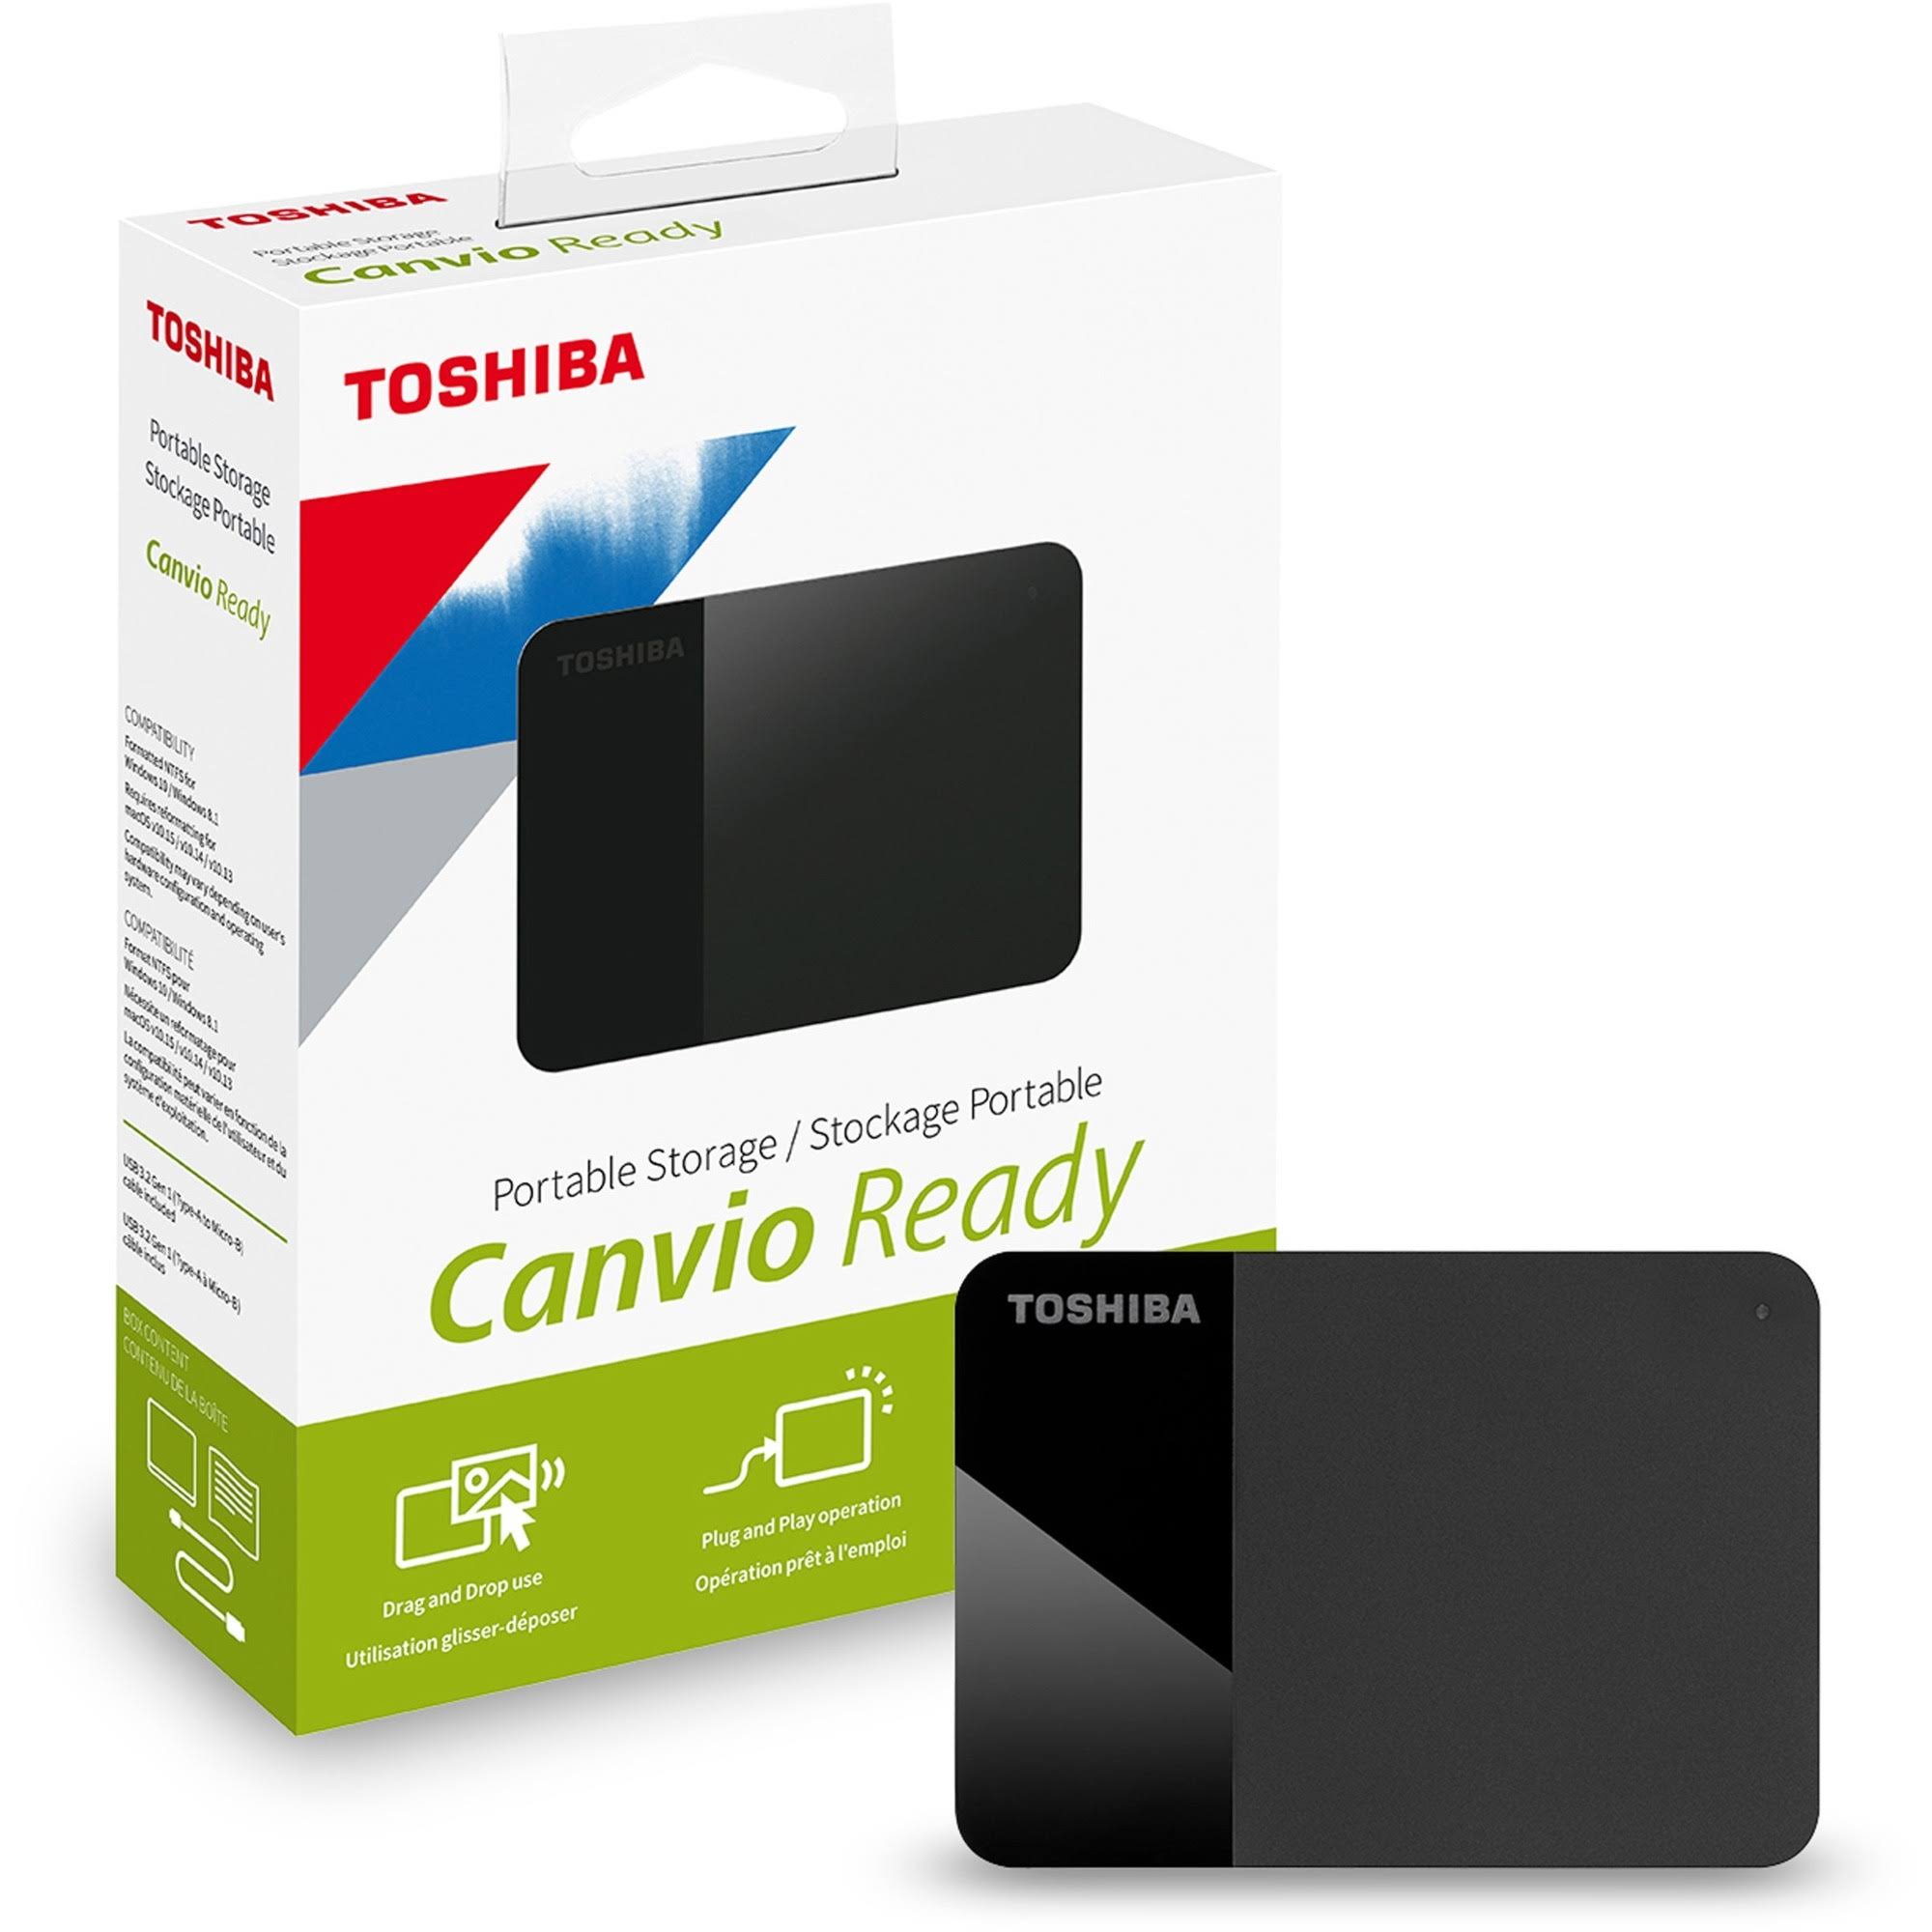 Toshiba 1tb Canvio Ready Portable External Hard Drive, Usb 3.0 - Black